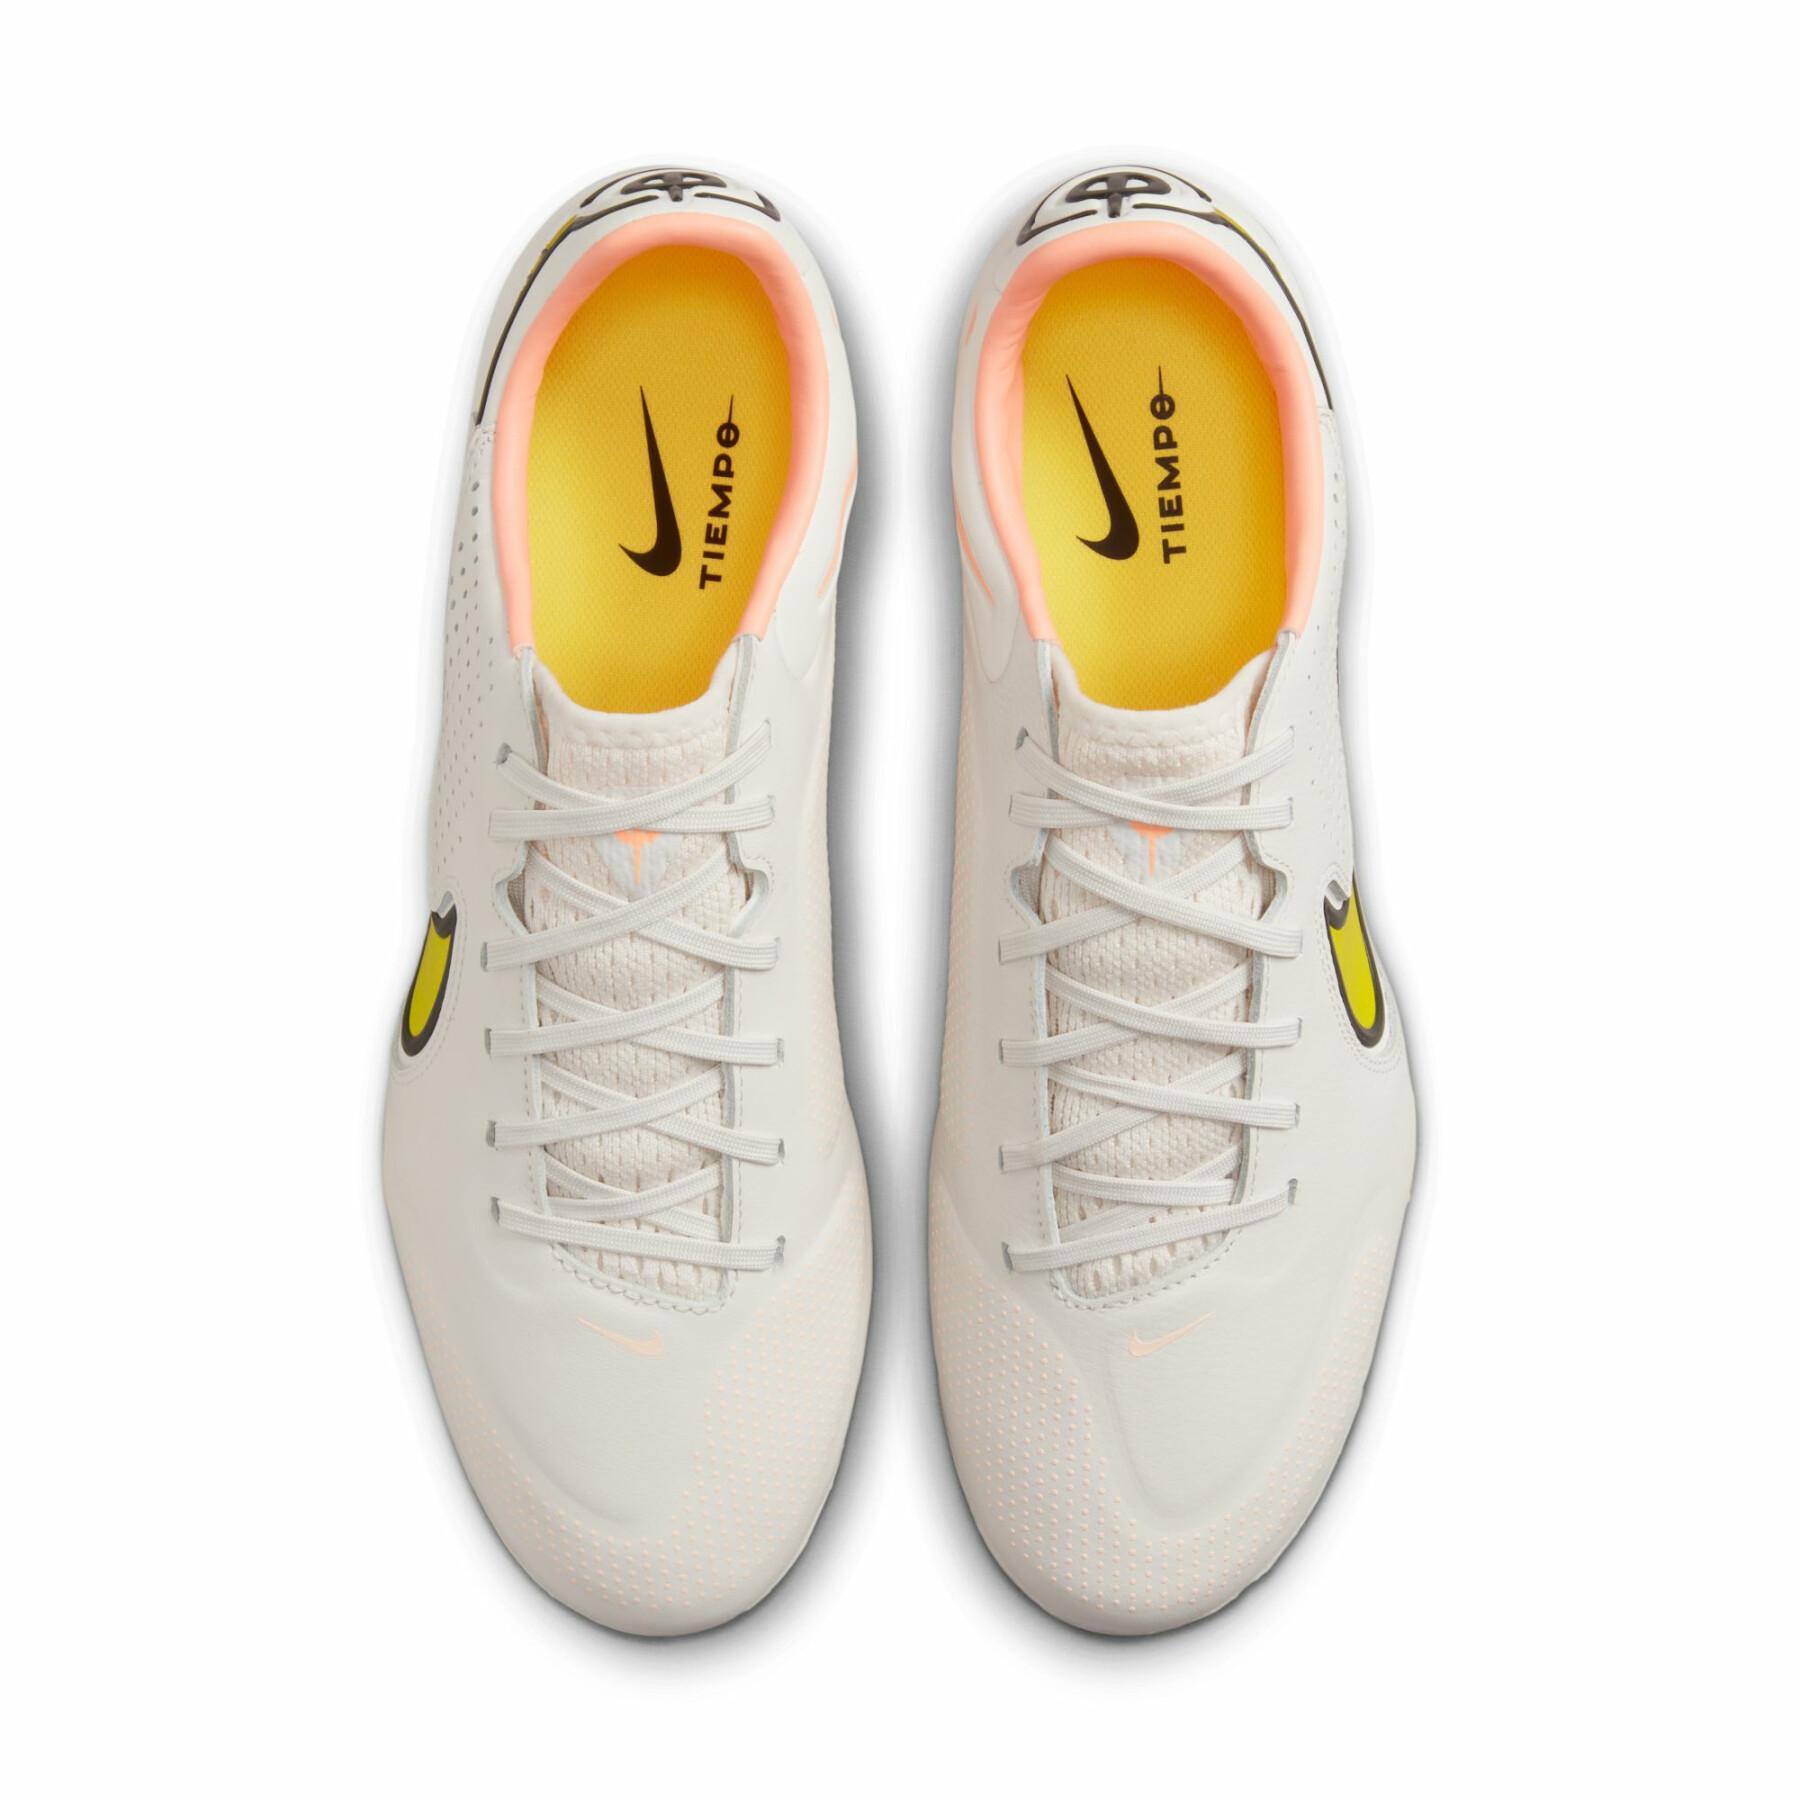 Fußballschuhe Nike Tiempo Legend 9 Pro AG-Pro - Lucent Pack